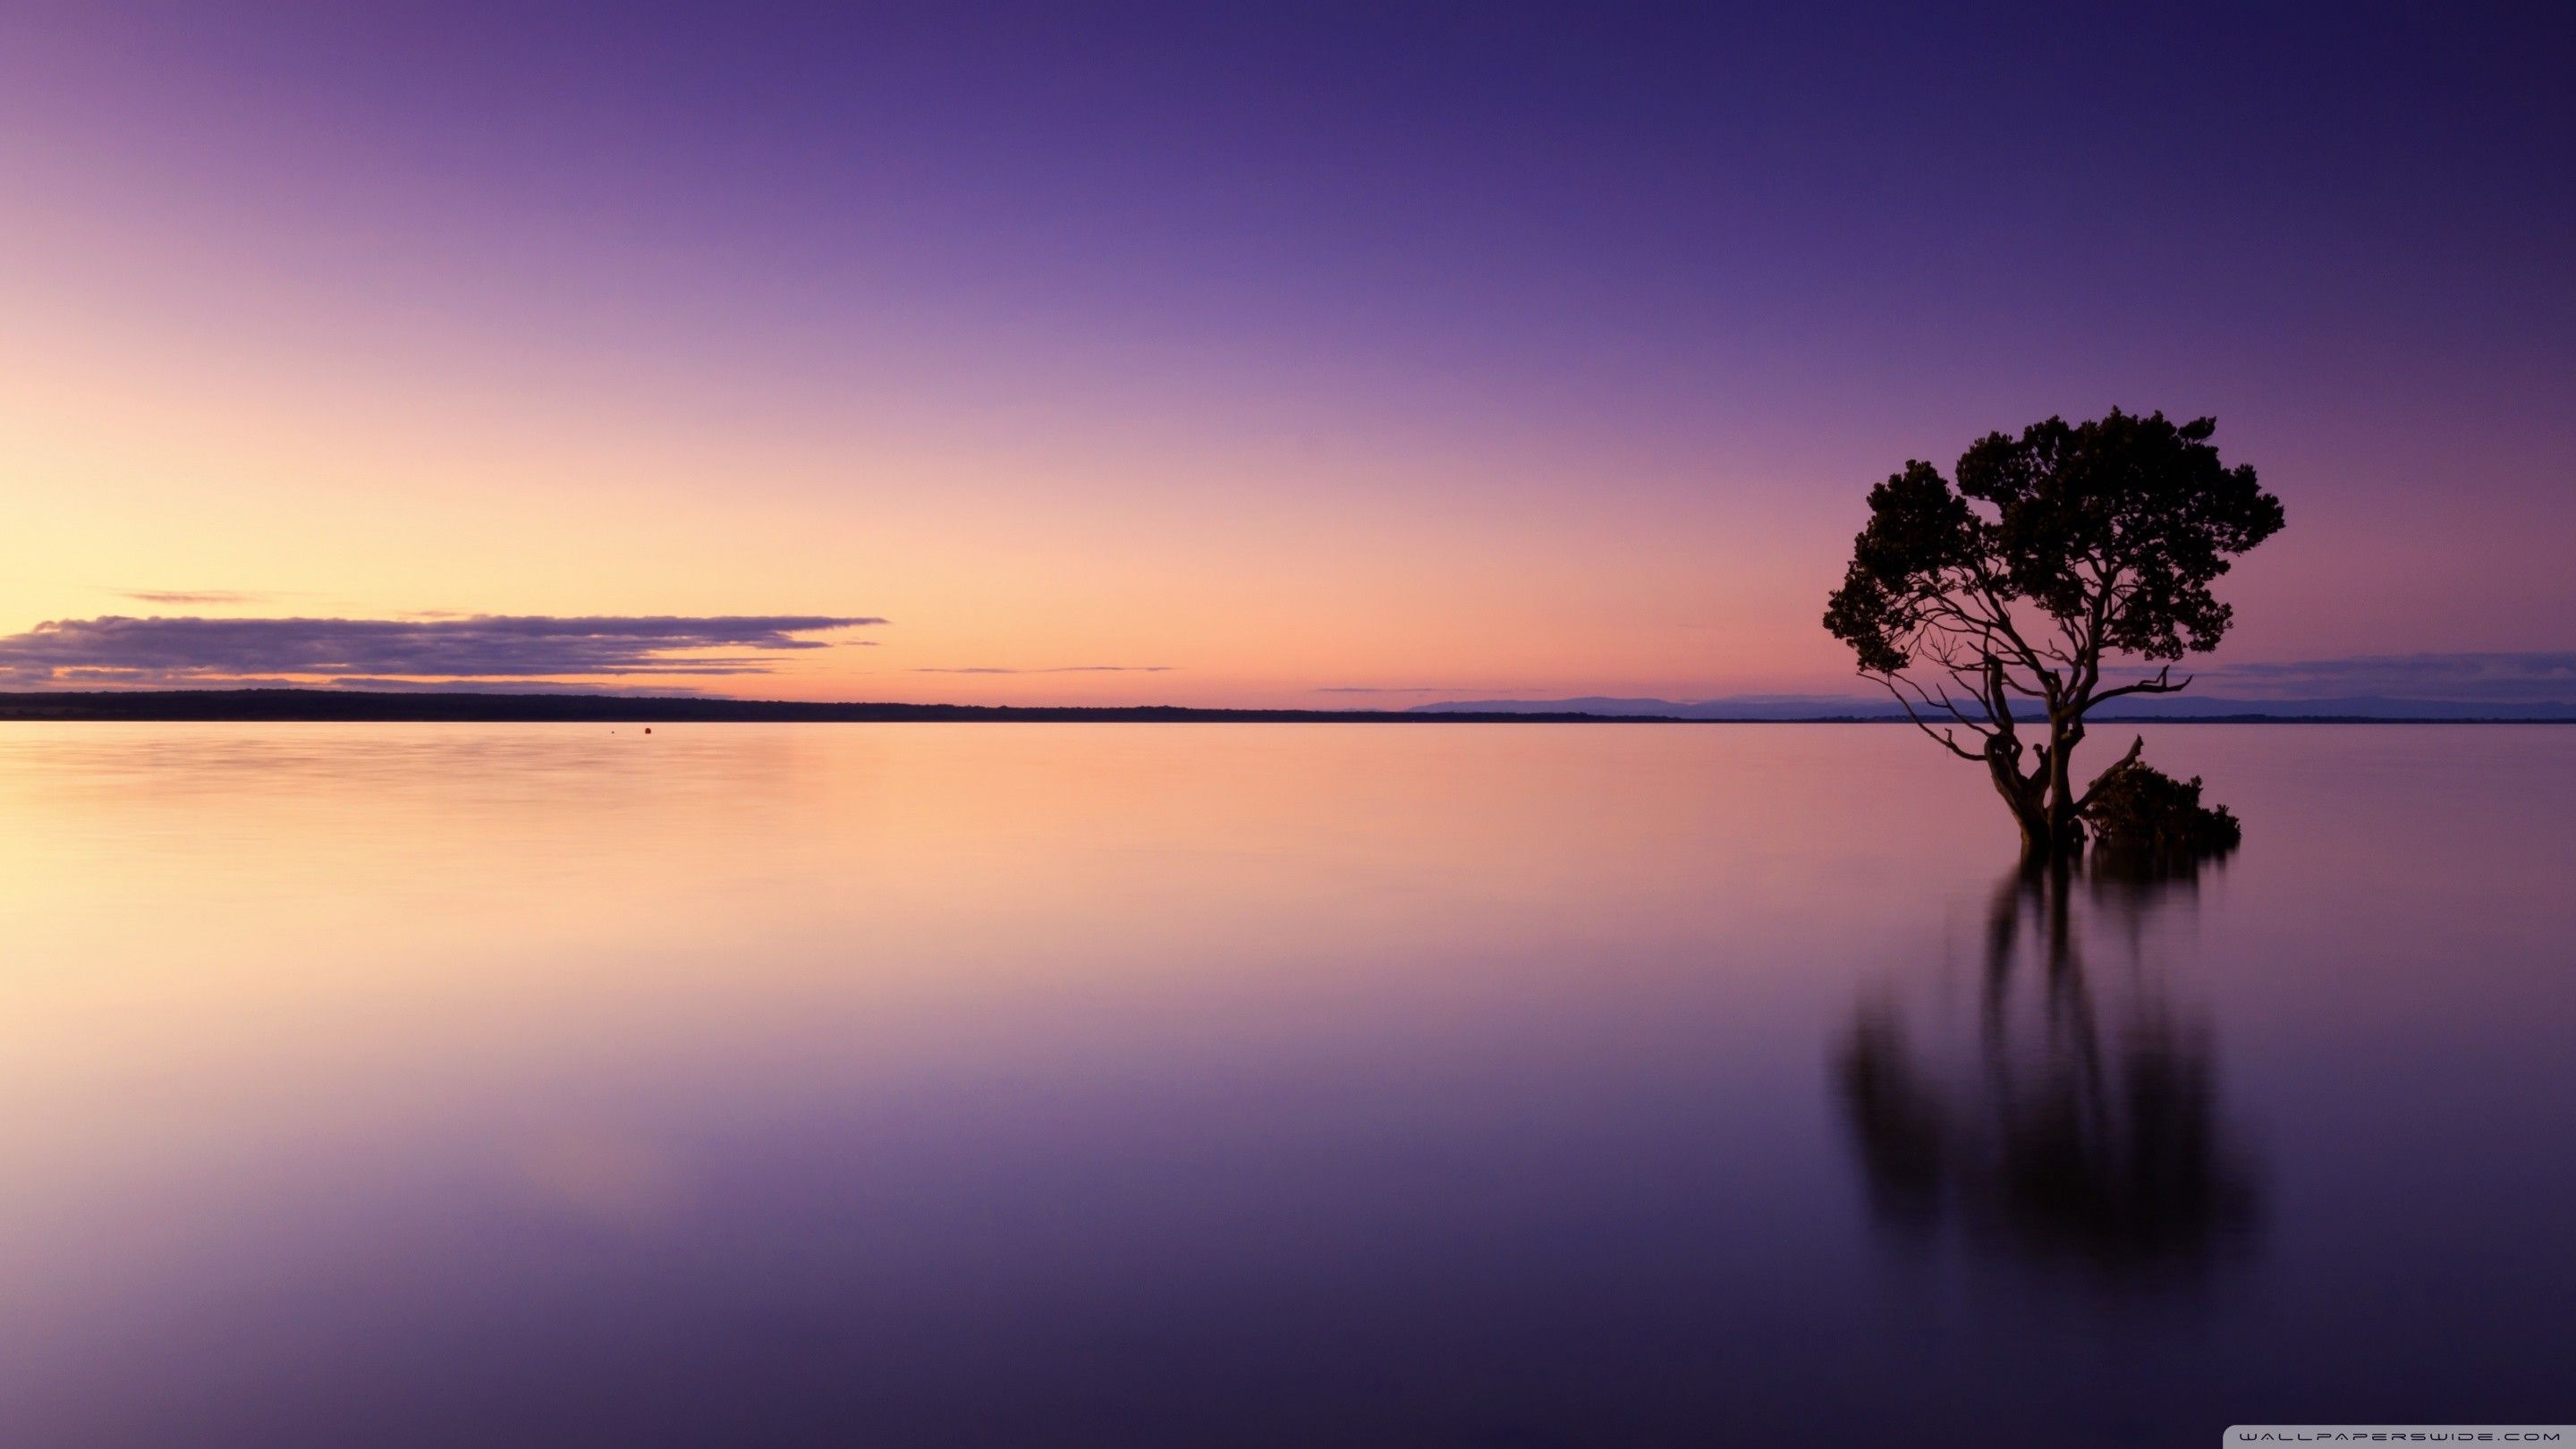 Evening Calming Rock Ocean Sea Landscape iPad Air Wallpapers Free Download